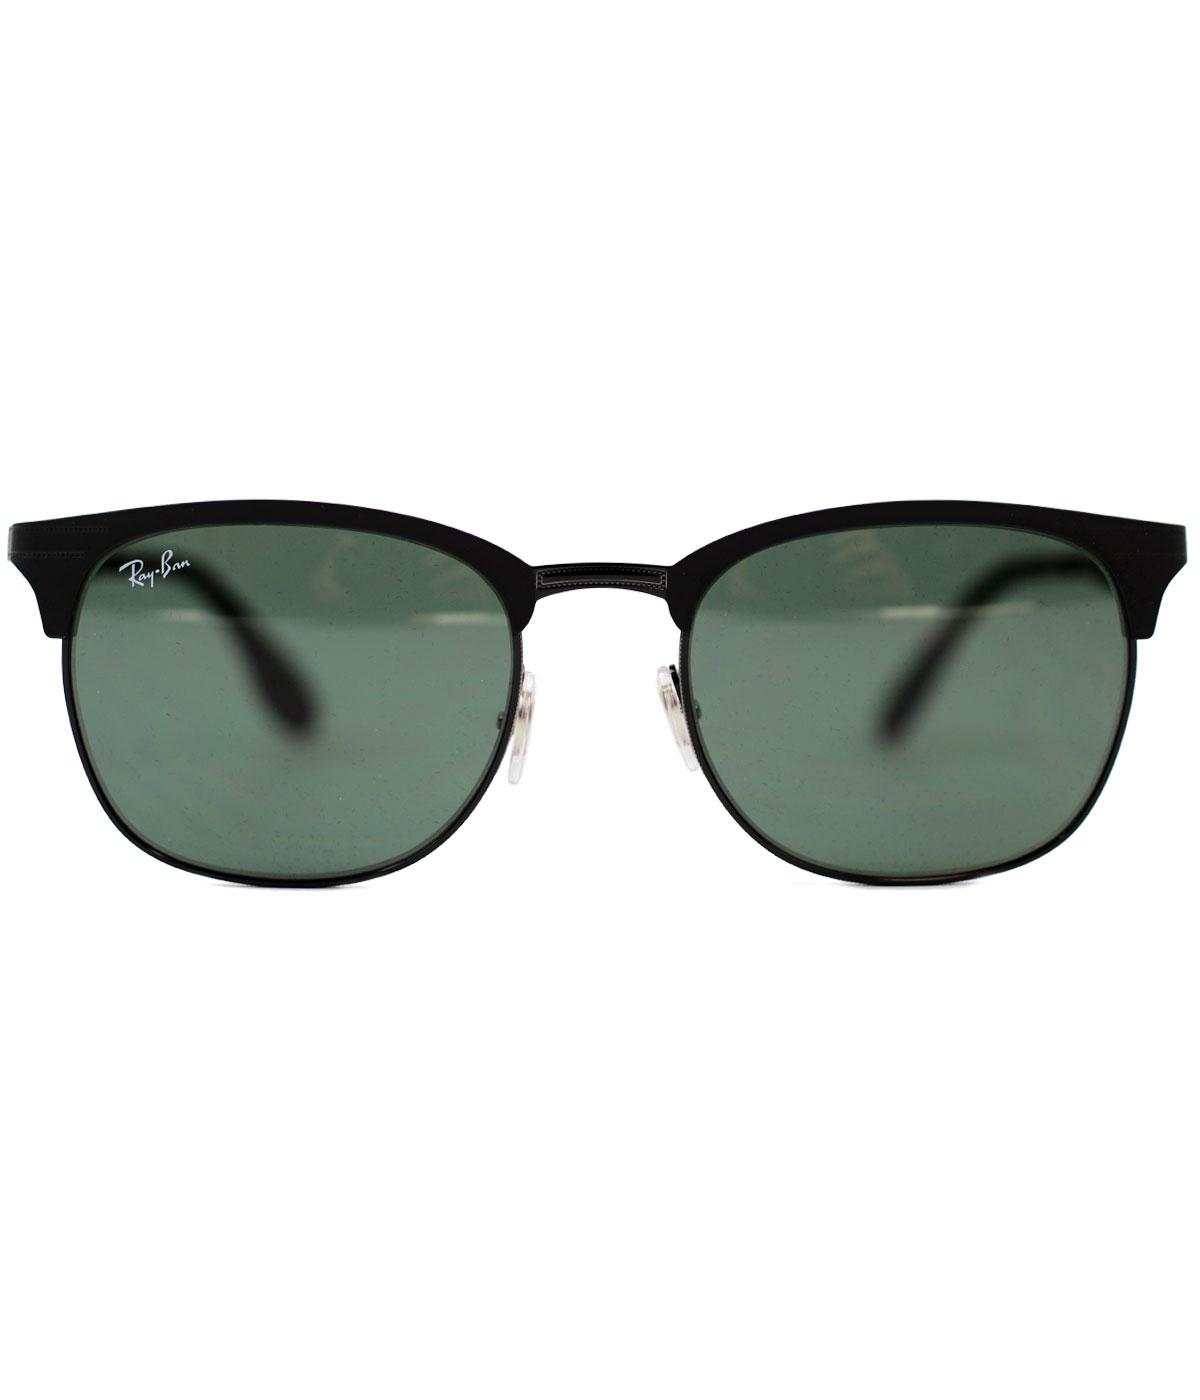 Thin Frame Clubmaster RAY-BAN Retro Mod Sunglasses